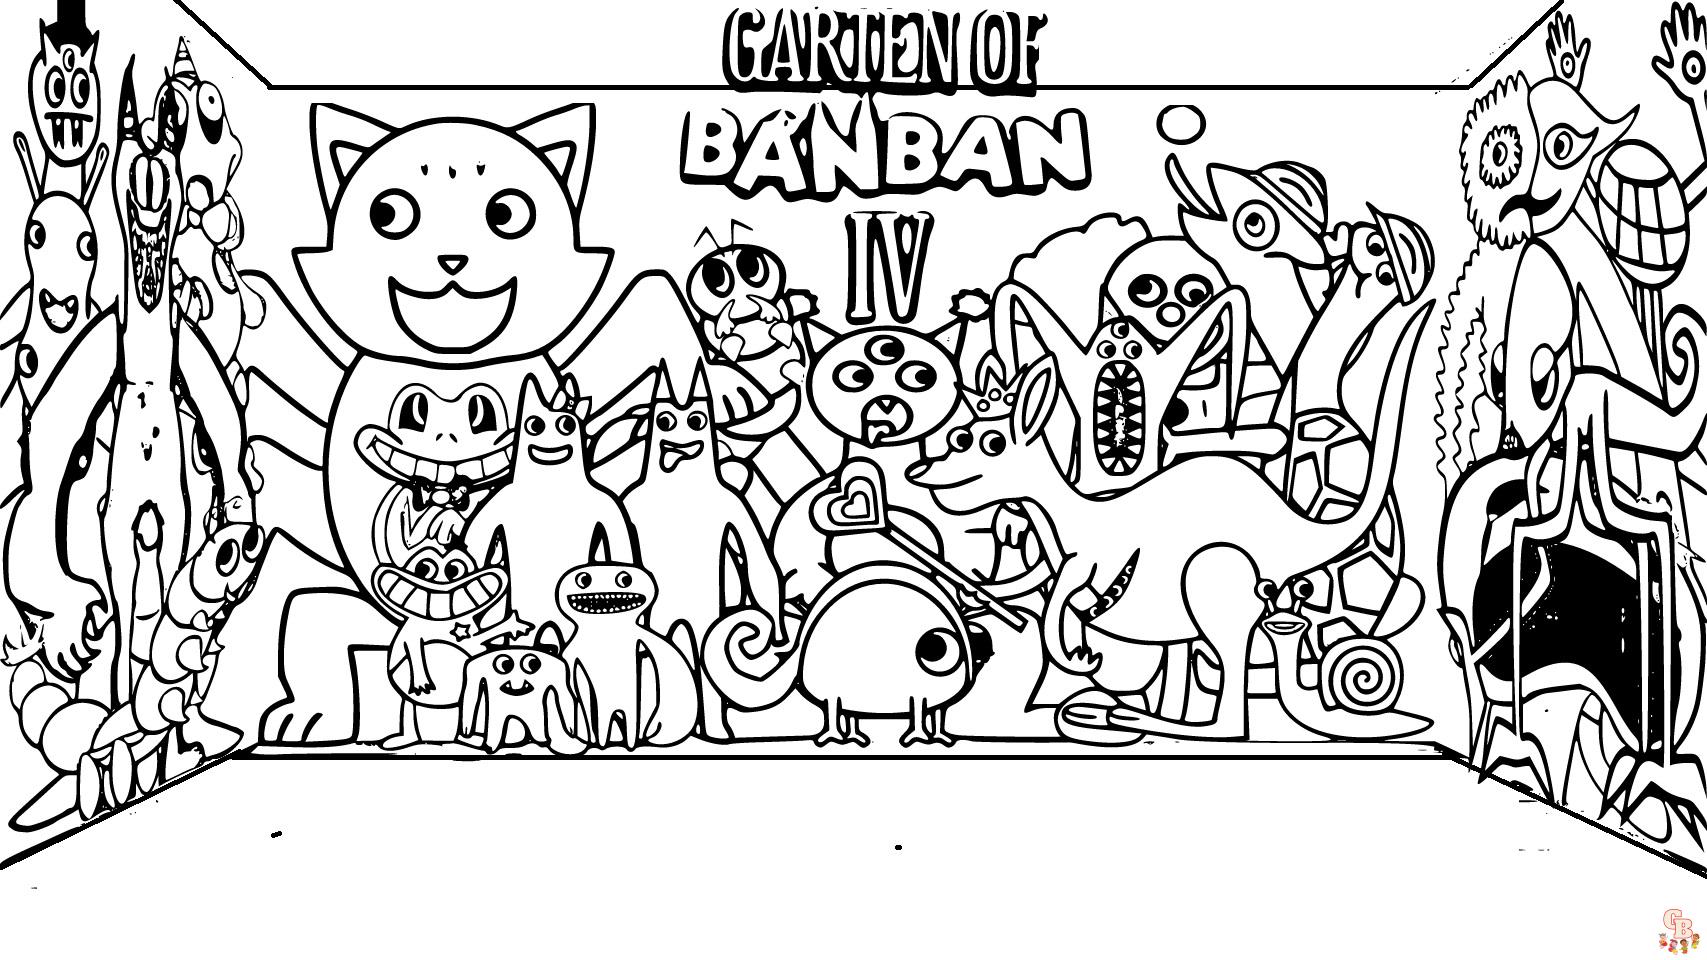 Garten of banban coloring pages